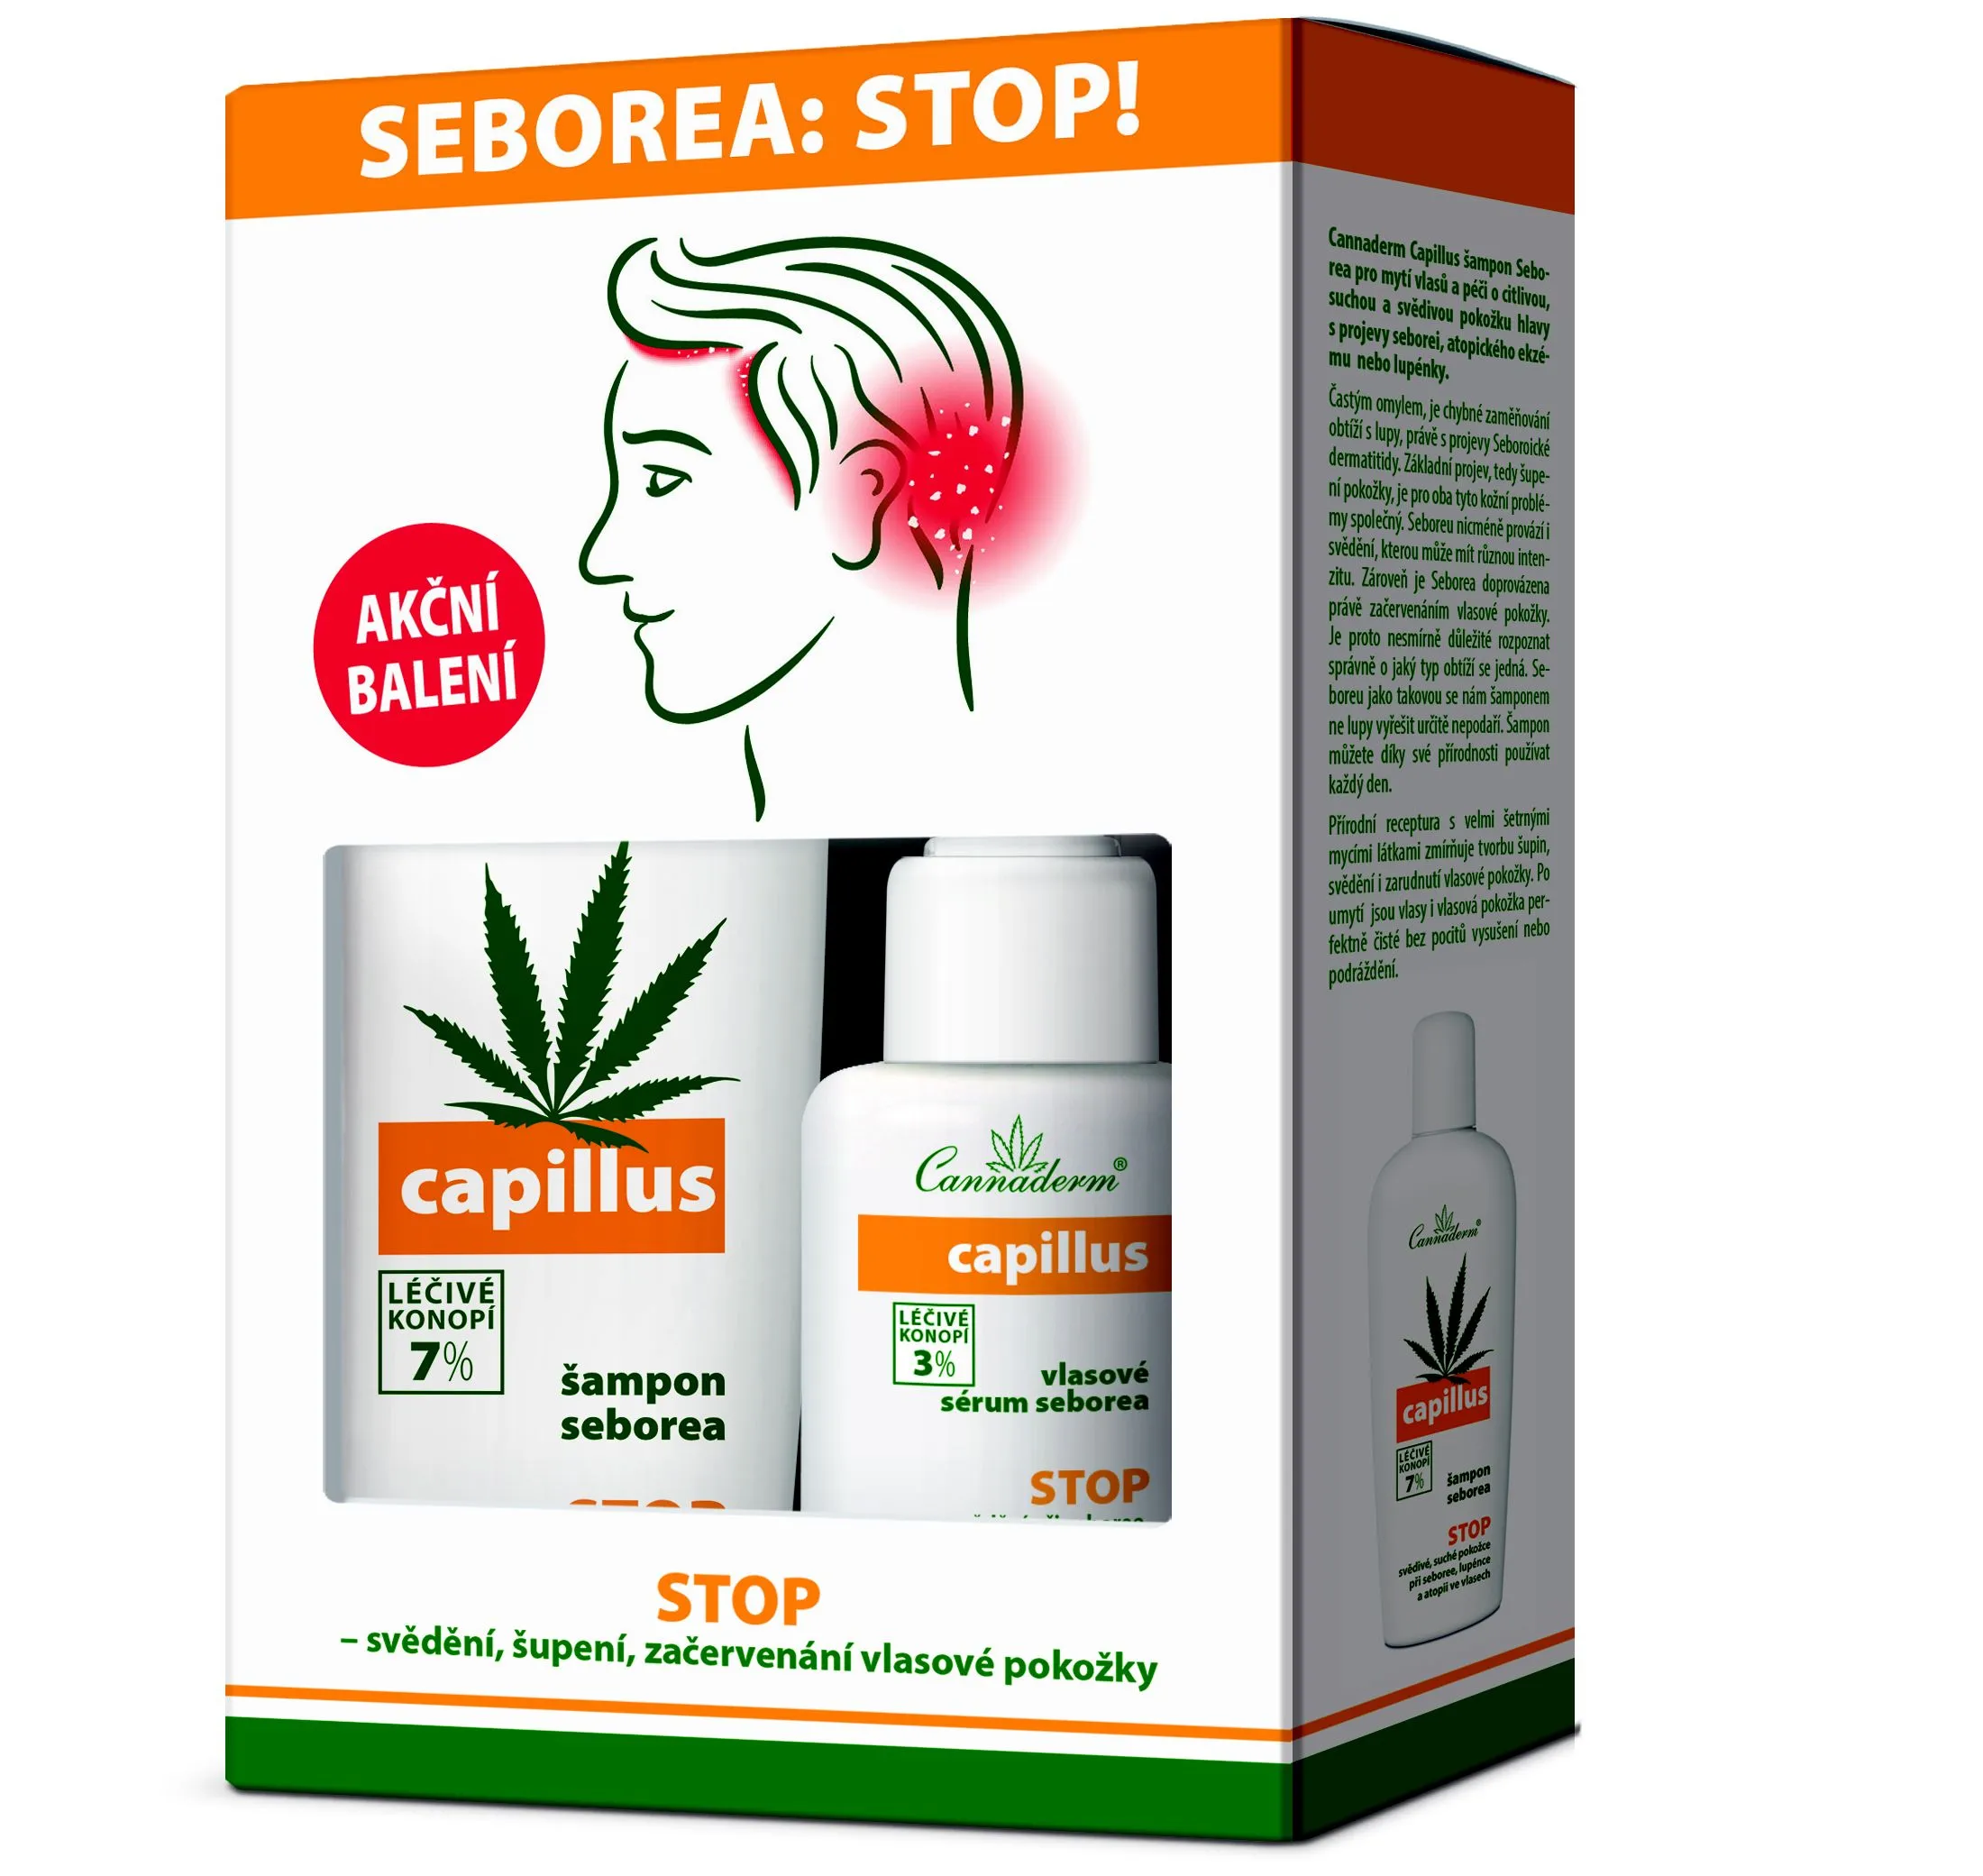 Cannaderm Capillus DUO-pack šampon + sérum seborea